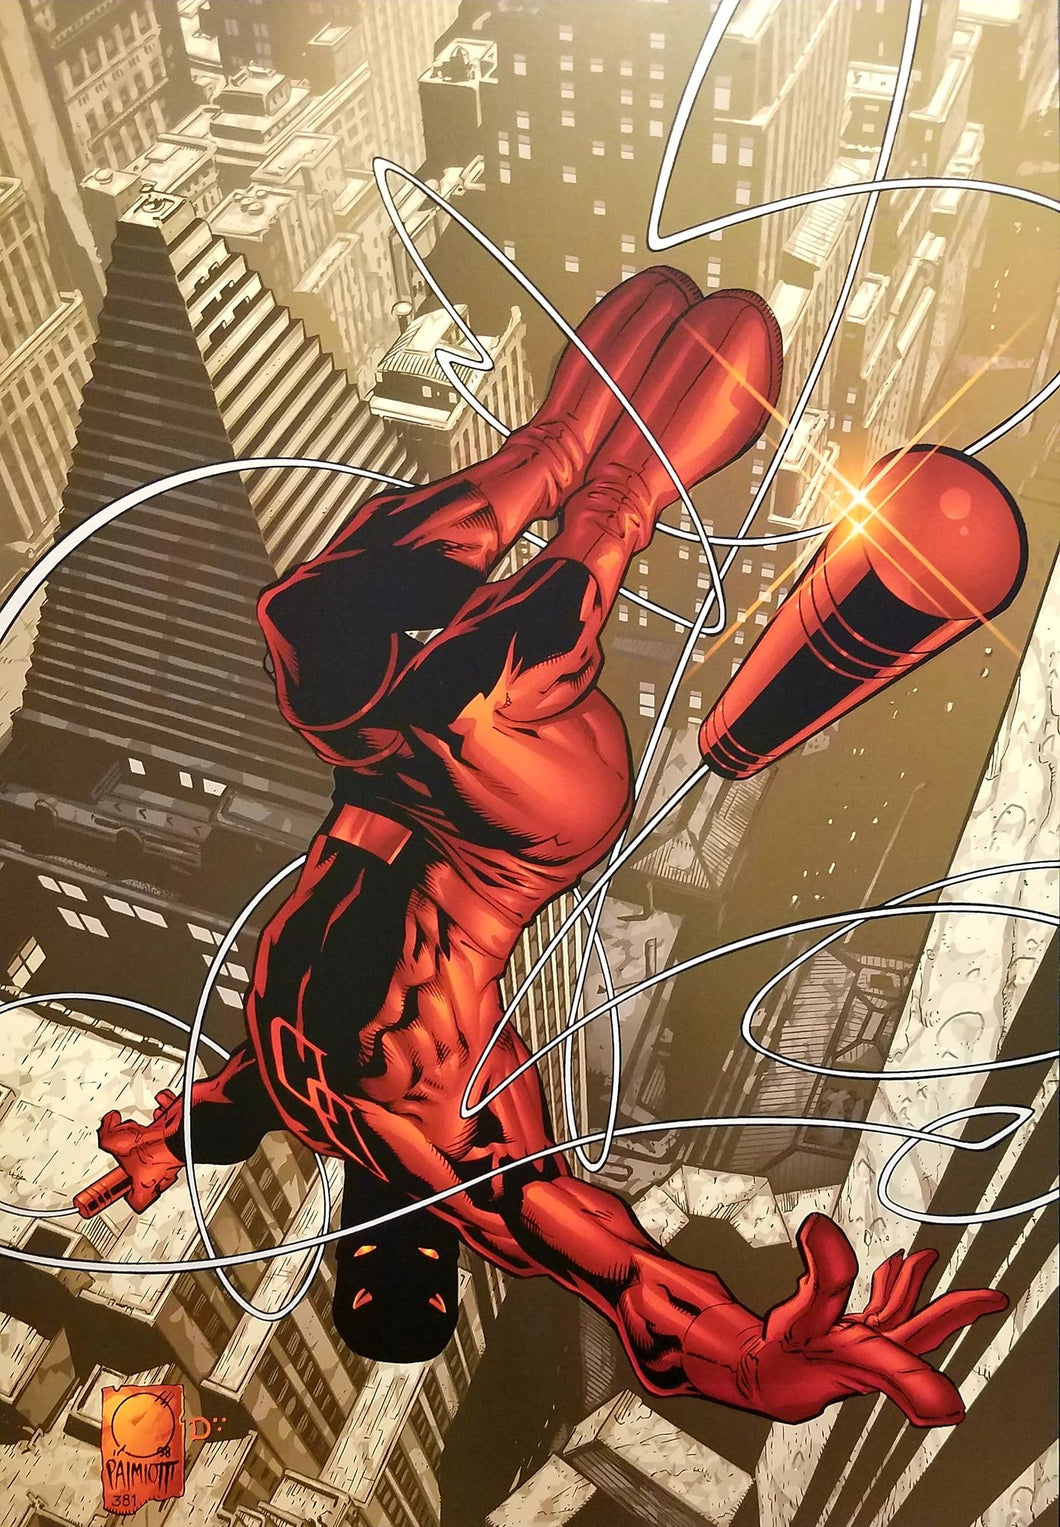 Daredevil #1 16x11 Art Print by Joe Quesada (1998), New Marvel Comics cardstock